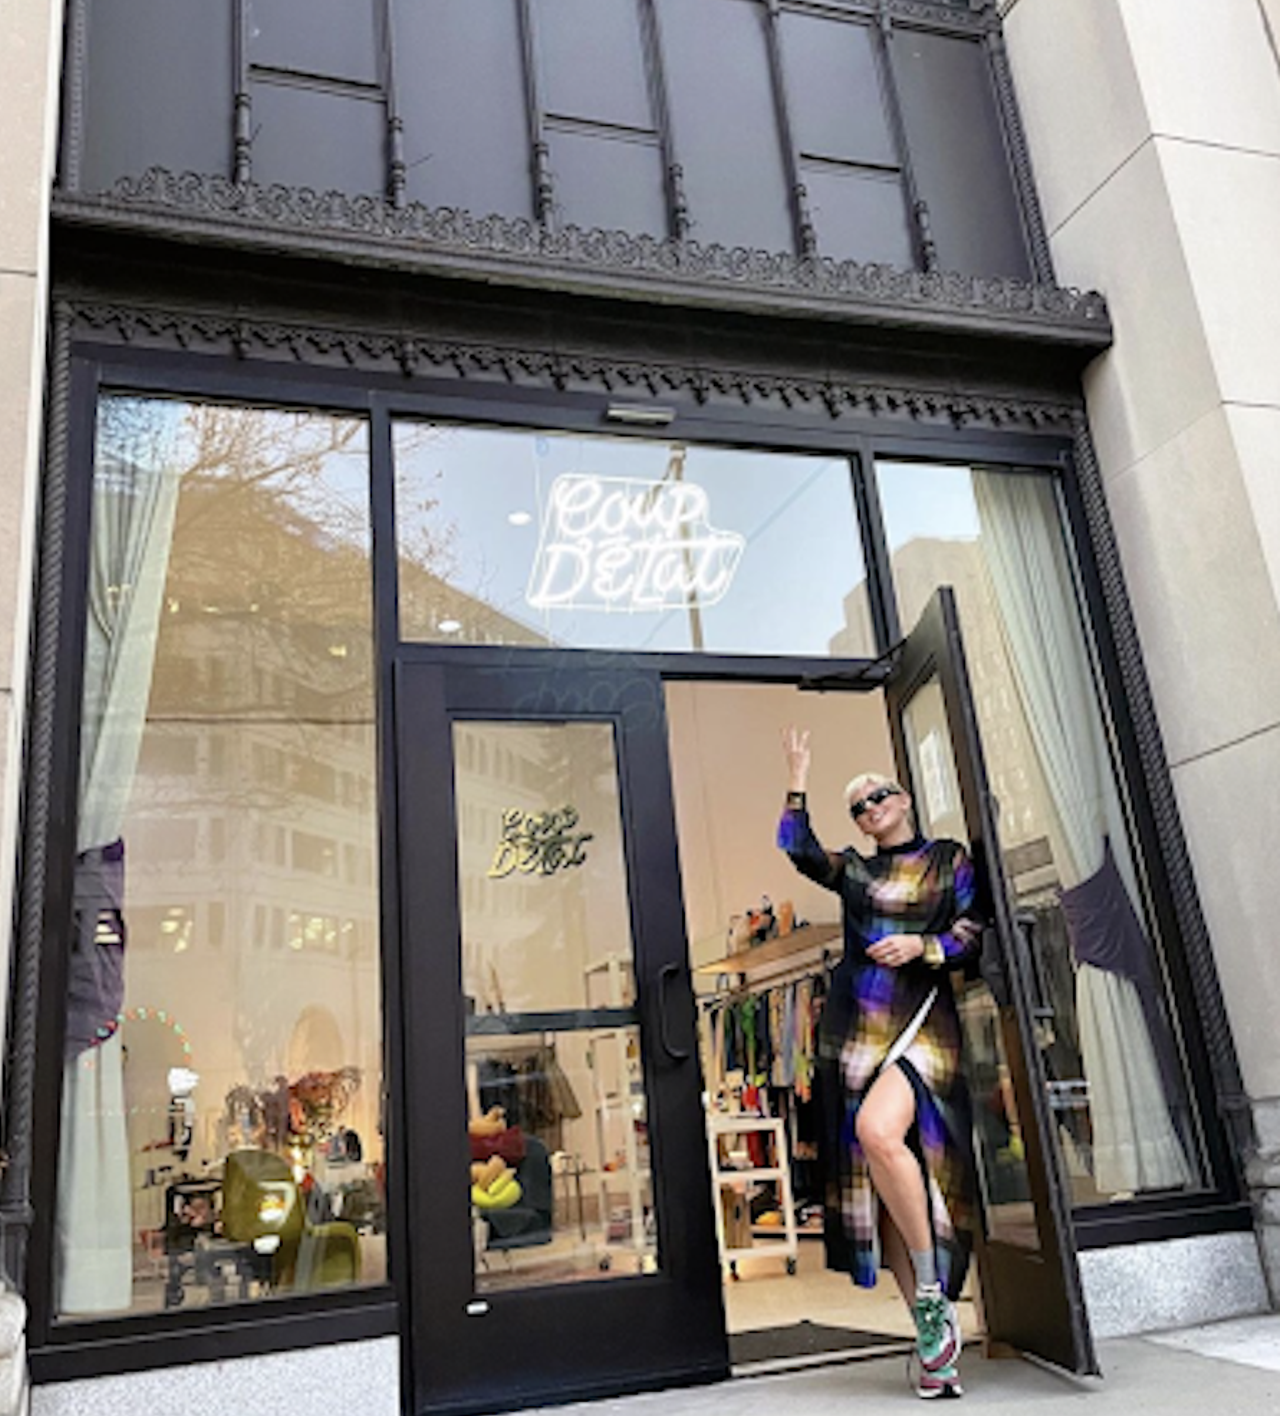 Coup D’etat
3044 W. Grand Blvd., Suite L-460, Detroit; 313-782-4480; shopcoupdetat.com
Angela Wisnewski opened Coup D’etat in 2019. The posh boutique features many independent designers with selections that go beyond the fast-fashion Instagram blueprint.